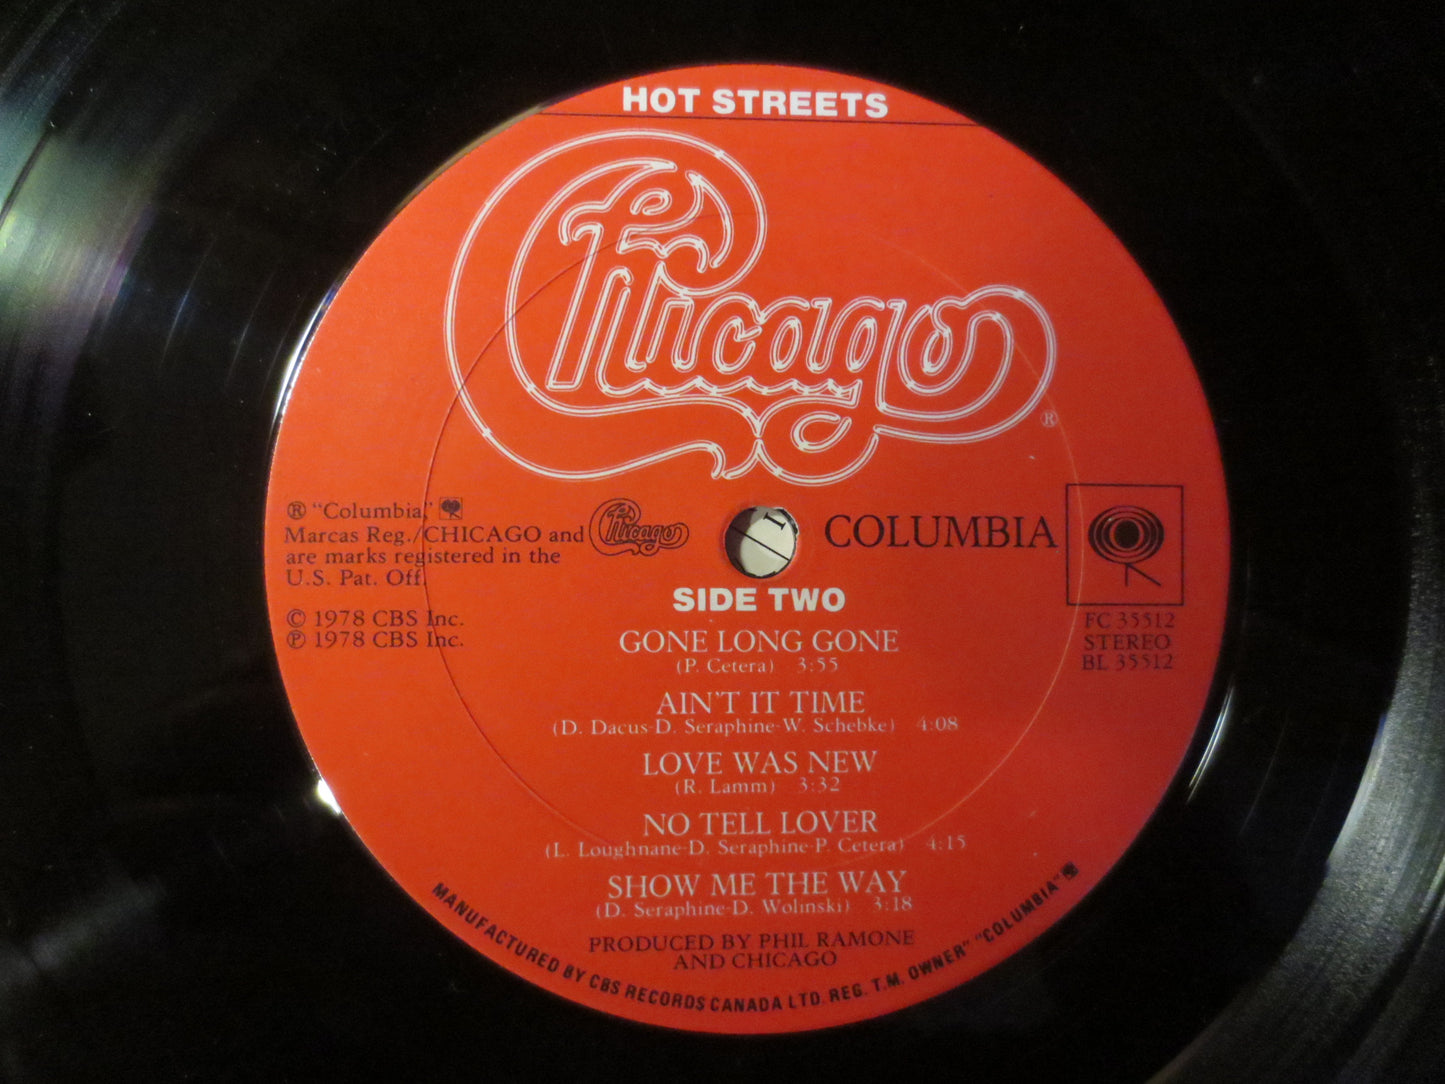 CHICAGO, HOT STREETS, Rock Records, Vintage Vinyl, Record Vinyl, Records, Vinyl Record, Chicago Record, Vinyl, 1978 Records